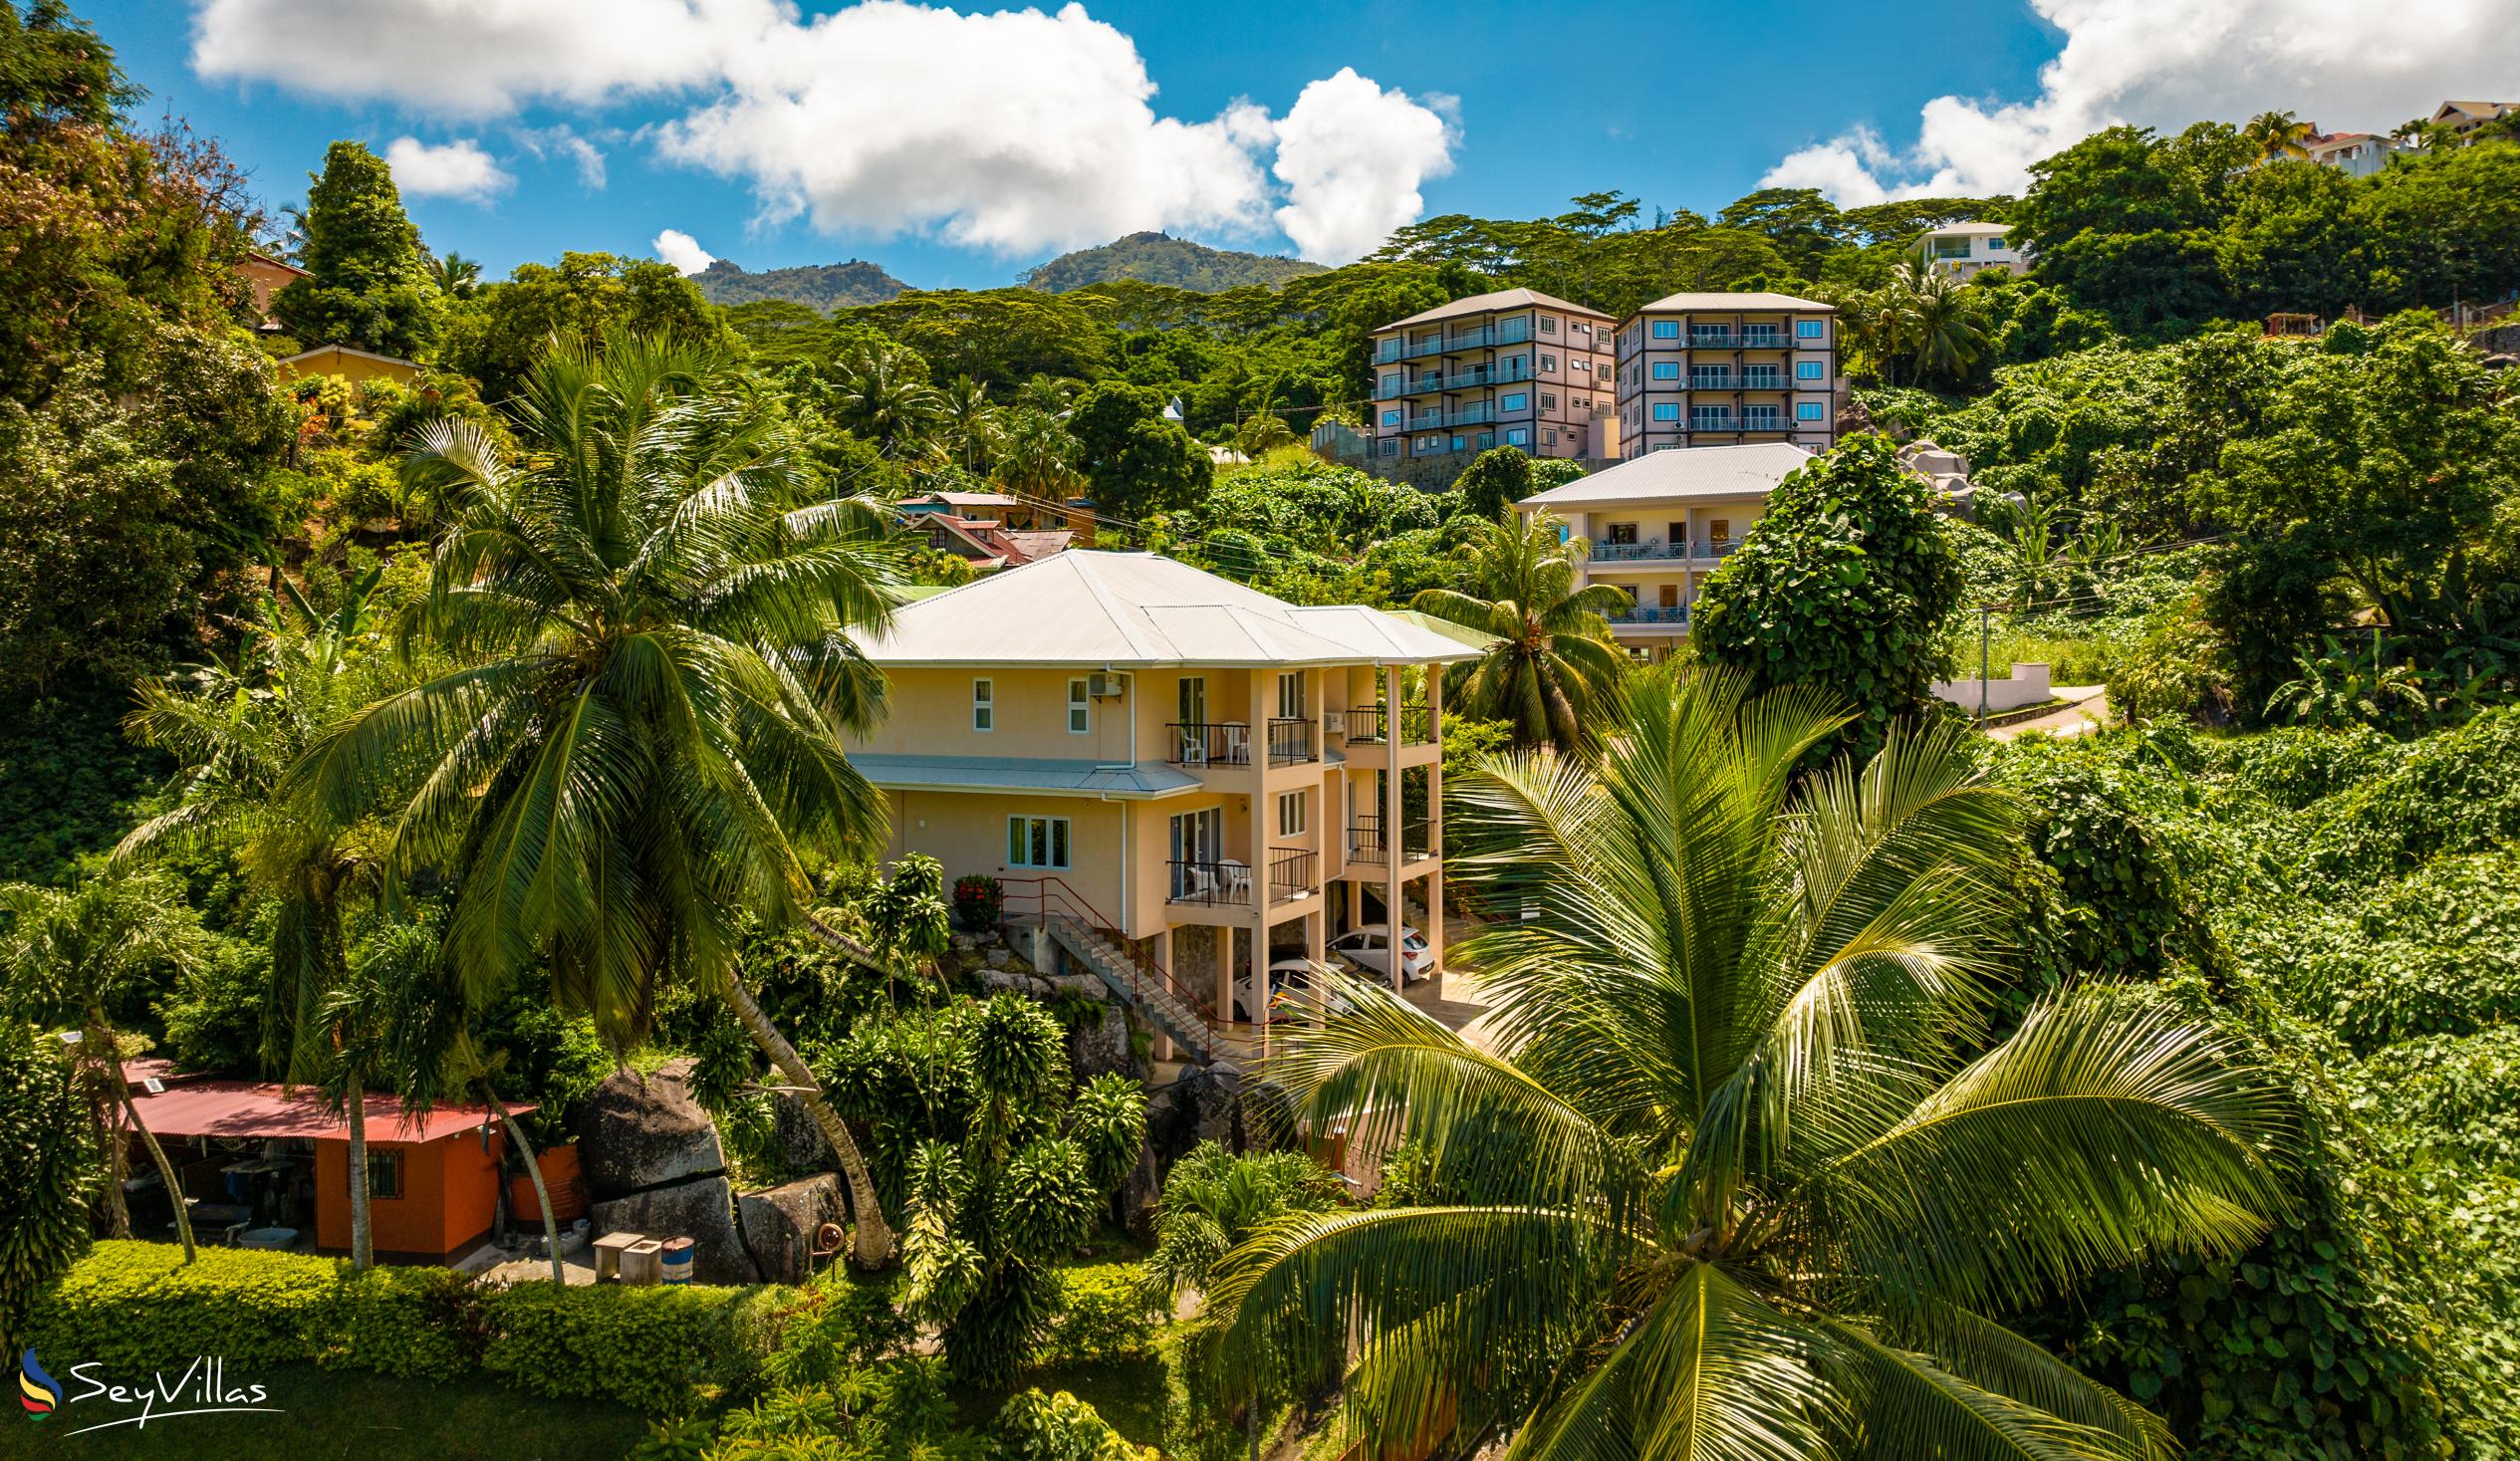 Foto 10: JAIDSS Holiday Apartments - Aussenbereich - Mahé (Seychellen)